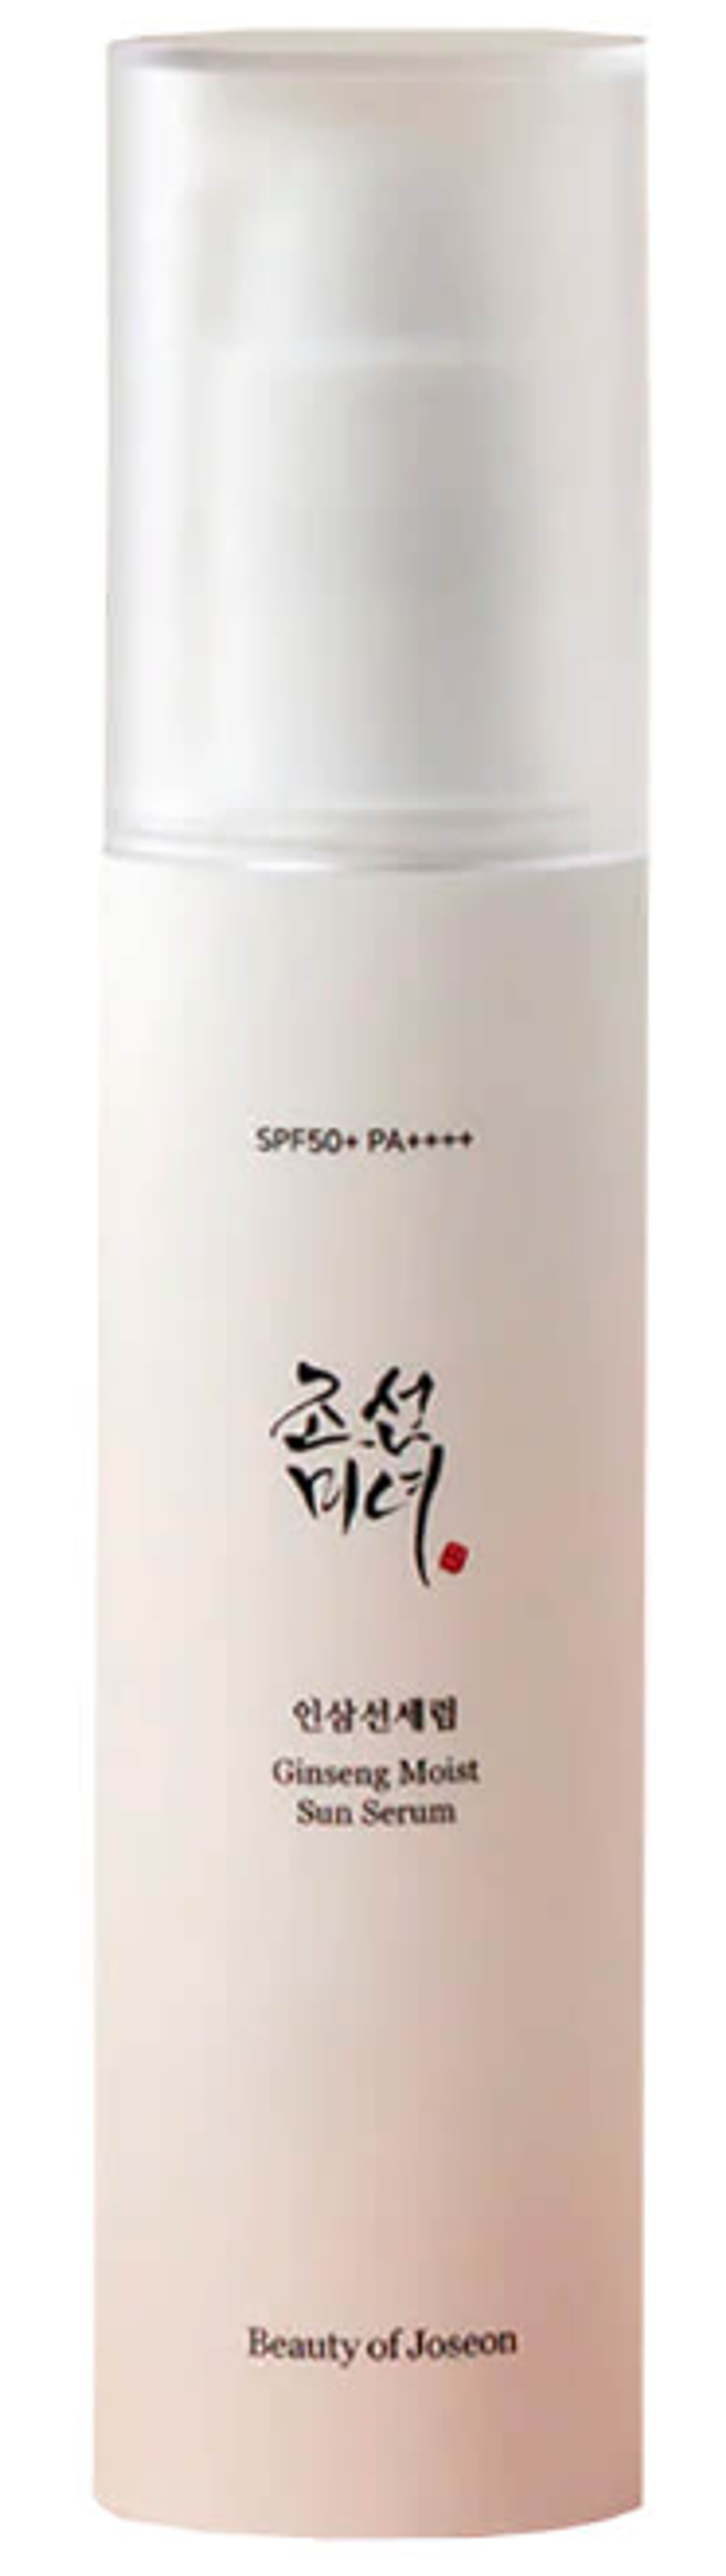 Beauty of Joseon Ginseng Moist Sun Serum SPF50+ PA++++ cолнцезащитная сыворотка 50м